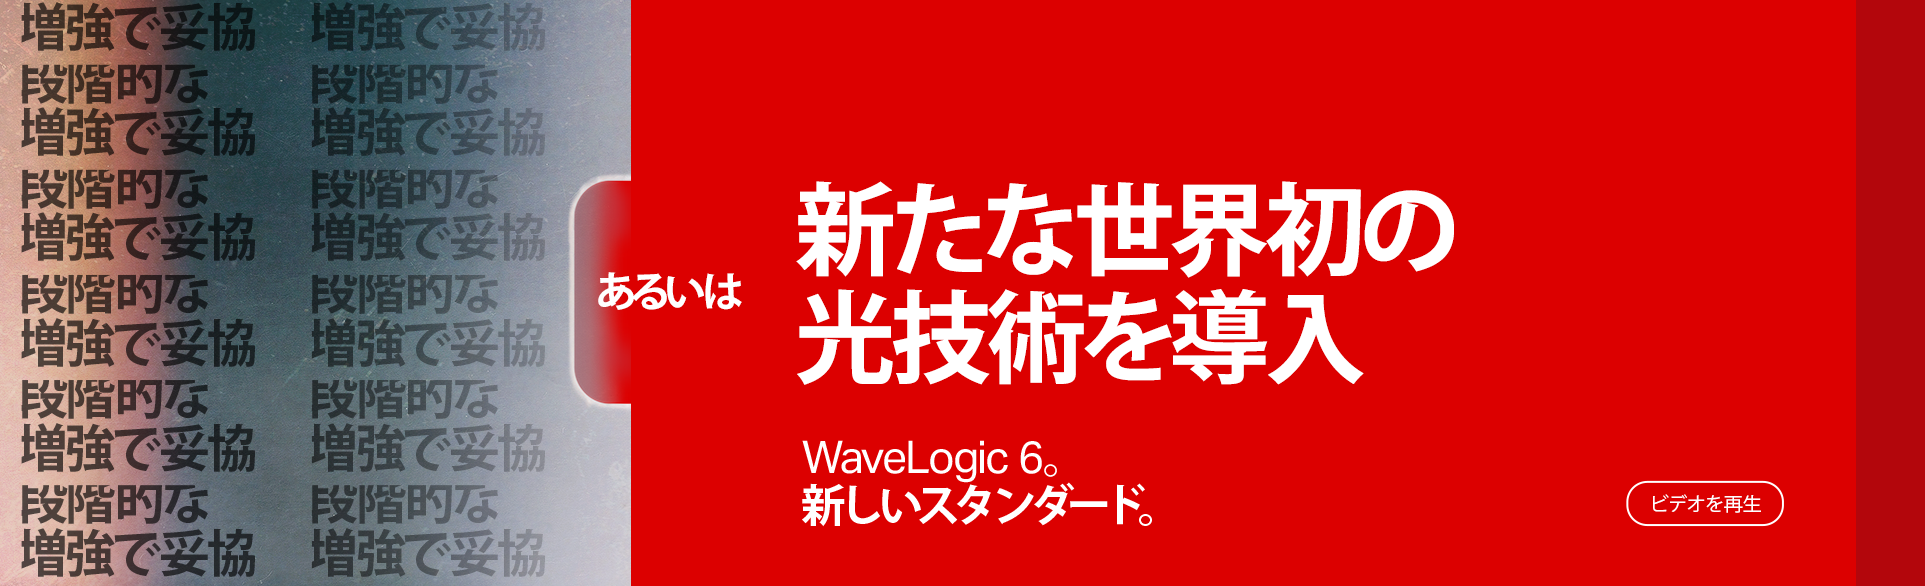 WaveLogic 6 Video